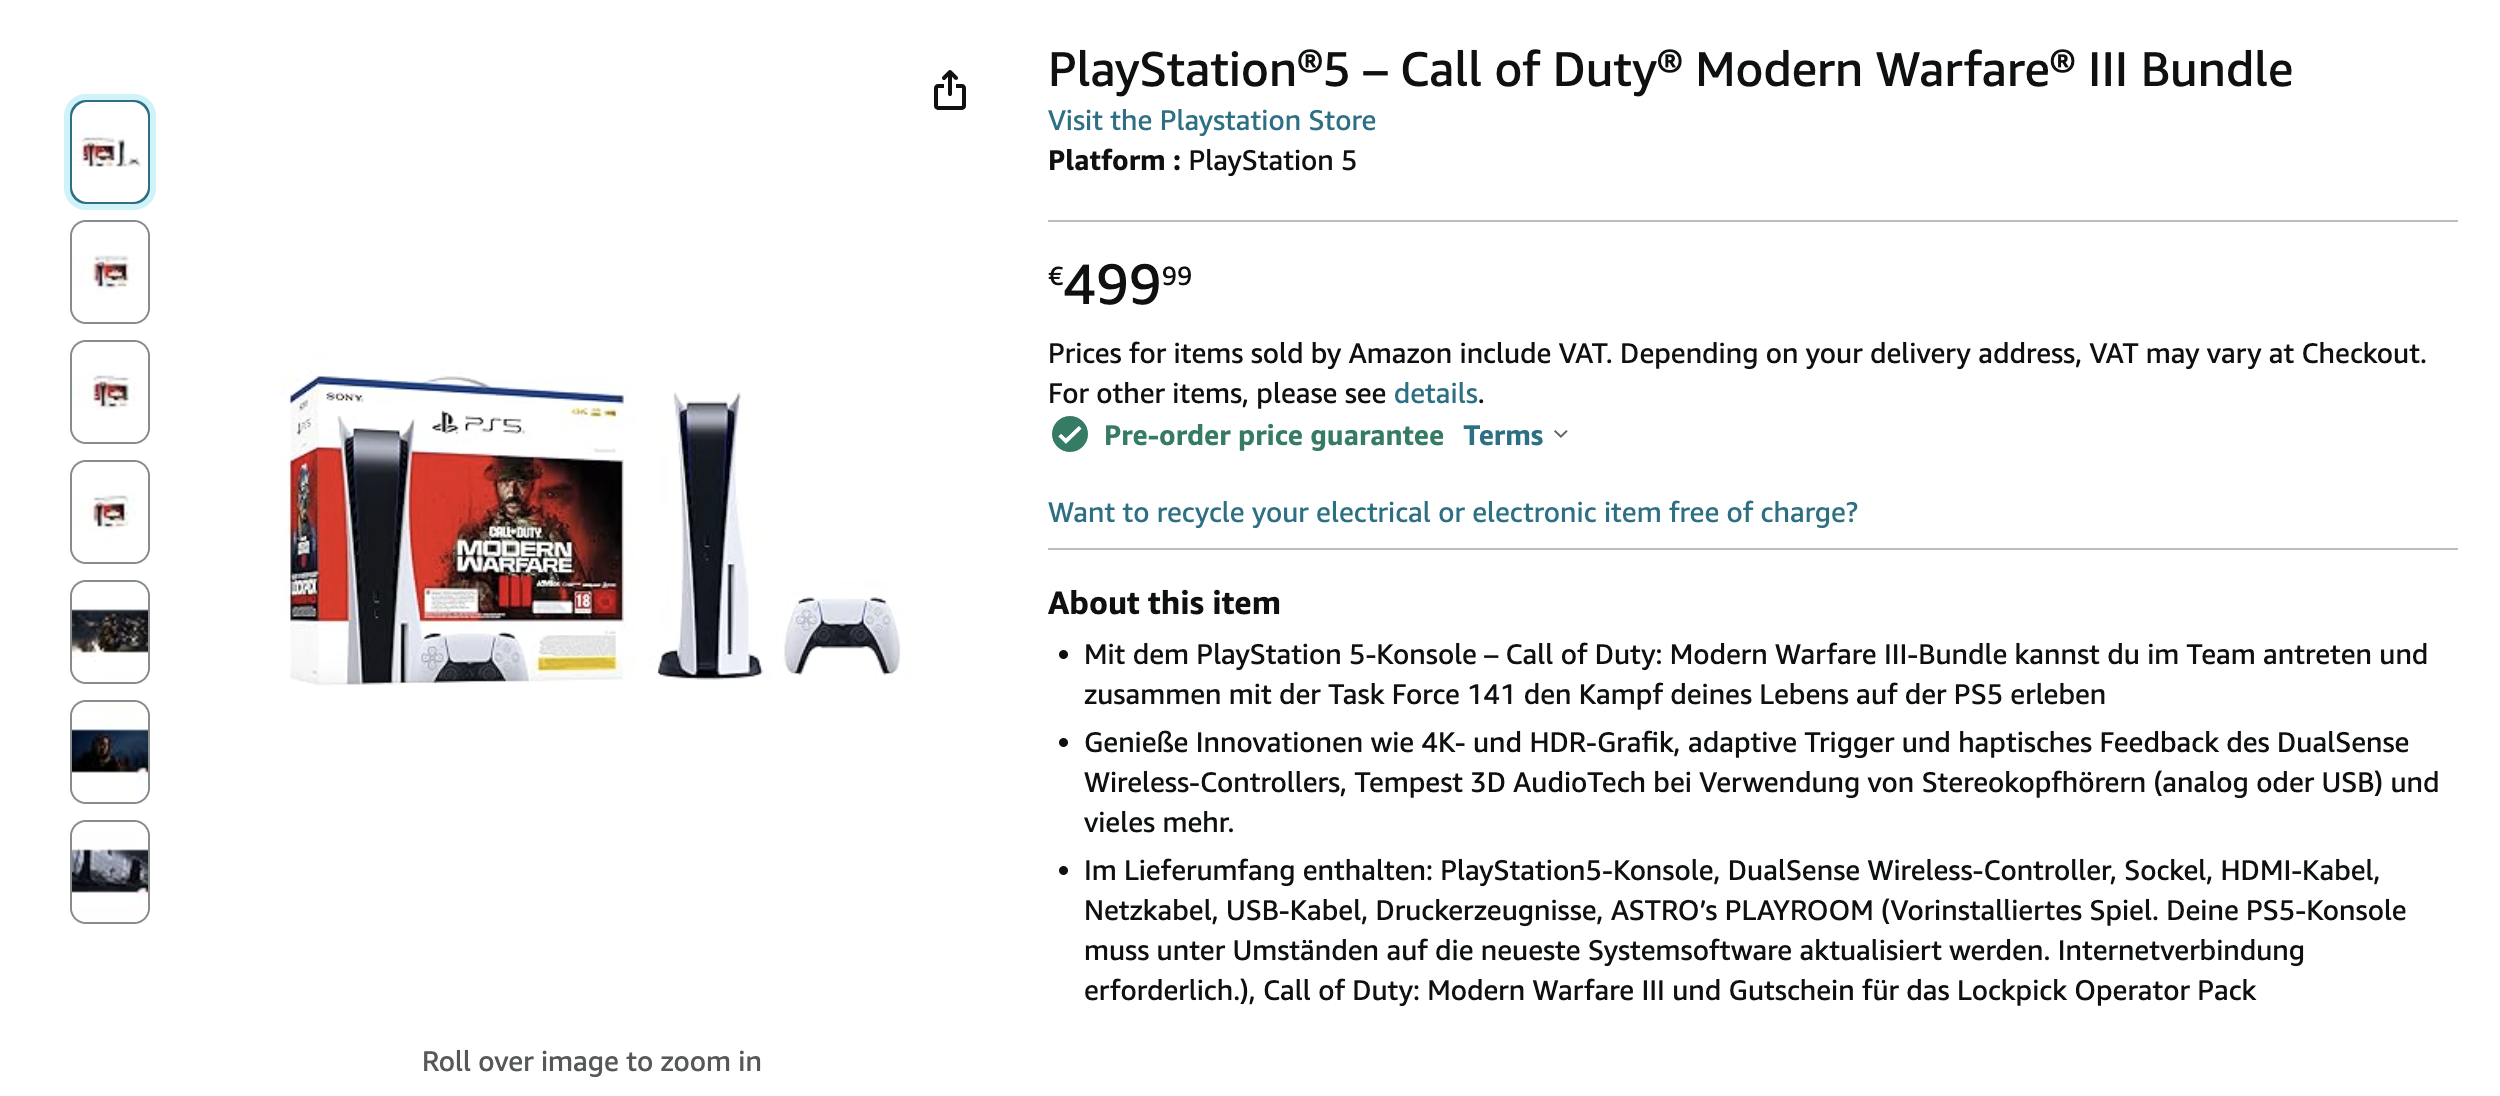 Похоже, Xbox Series X выпустят в "неофициальном" бандле с Call of Duty: Modern Warfare 3 для конкуренции с Playstation 5: с сайта NEWXBOXONE.RU